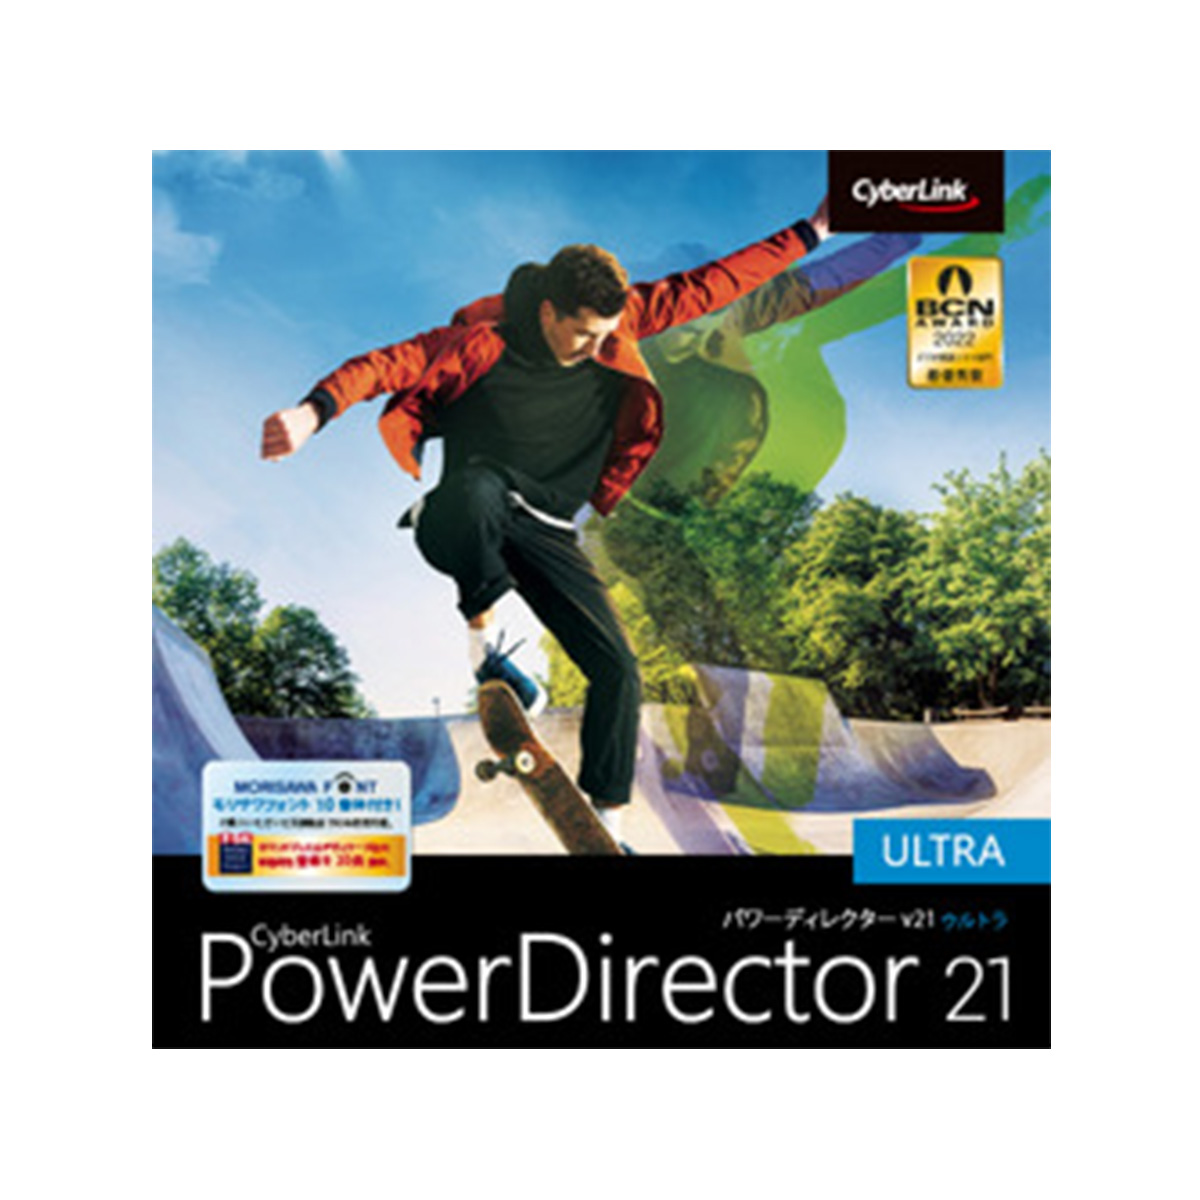 PowerDirector 21 Ultra ダウンロード版